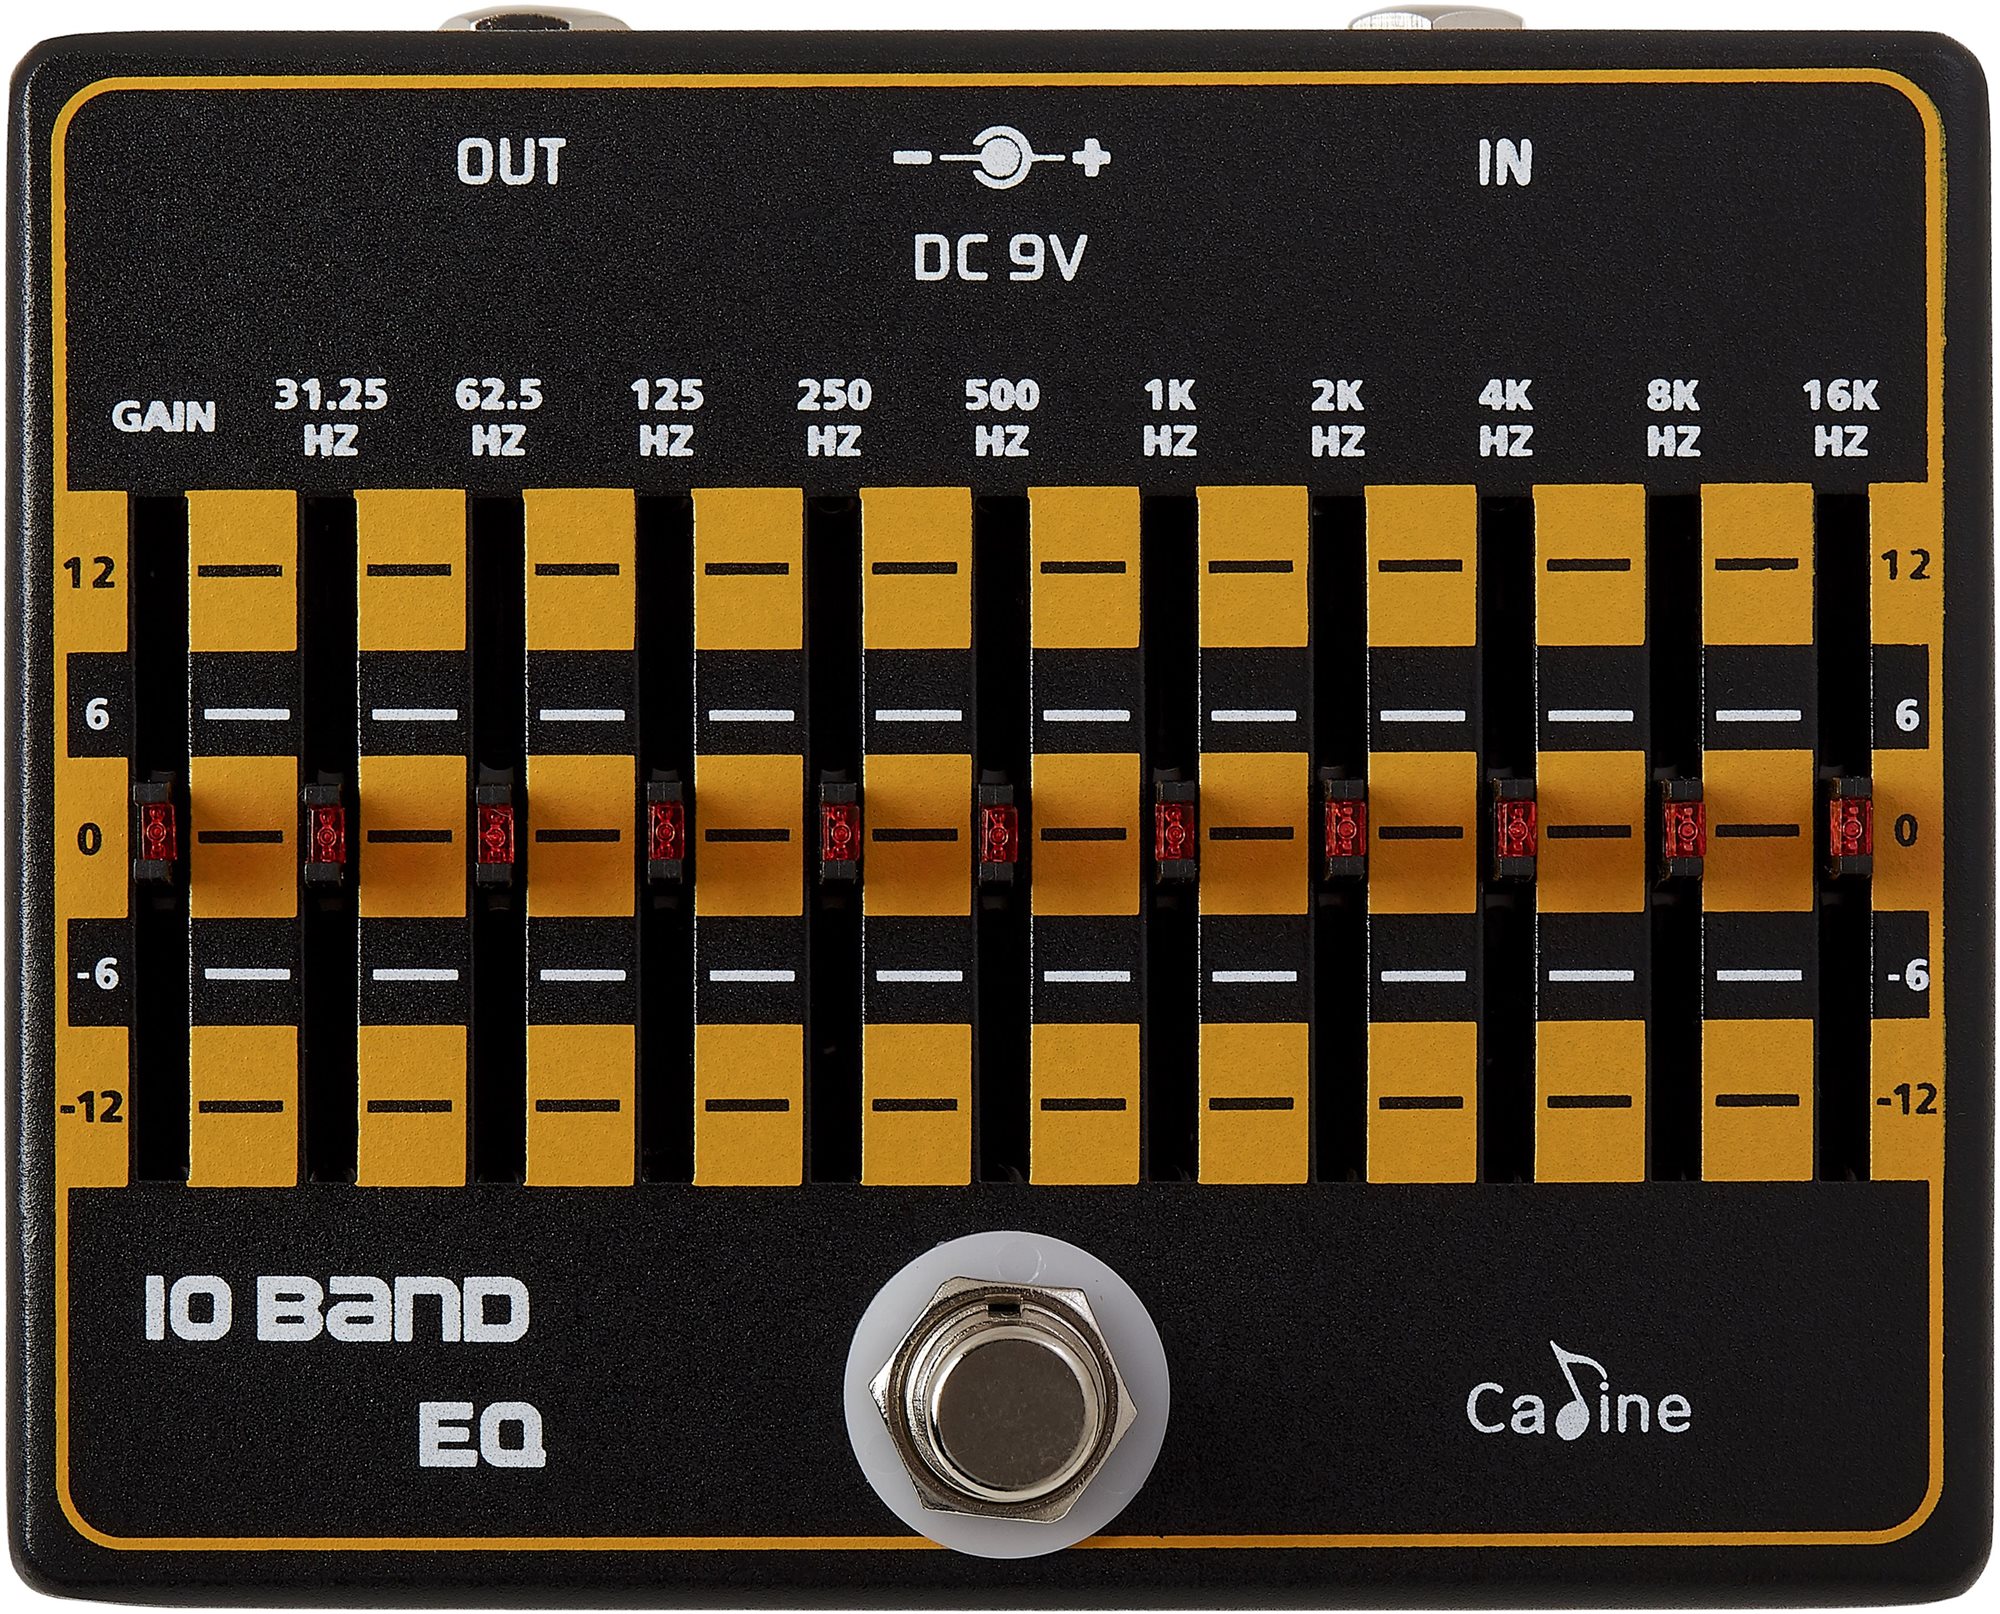 CALINE CP-24 10 Band EQ